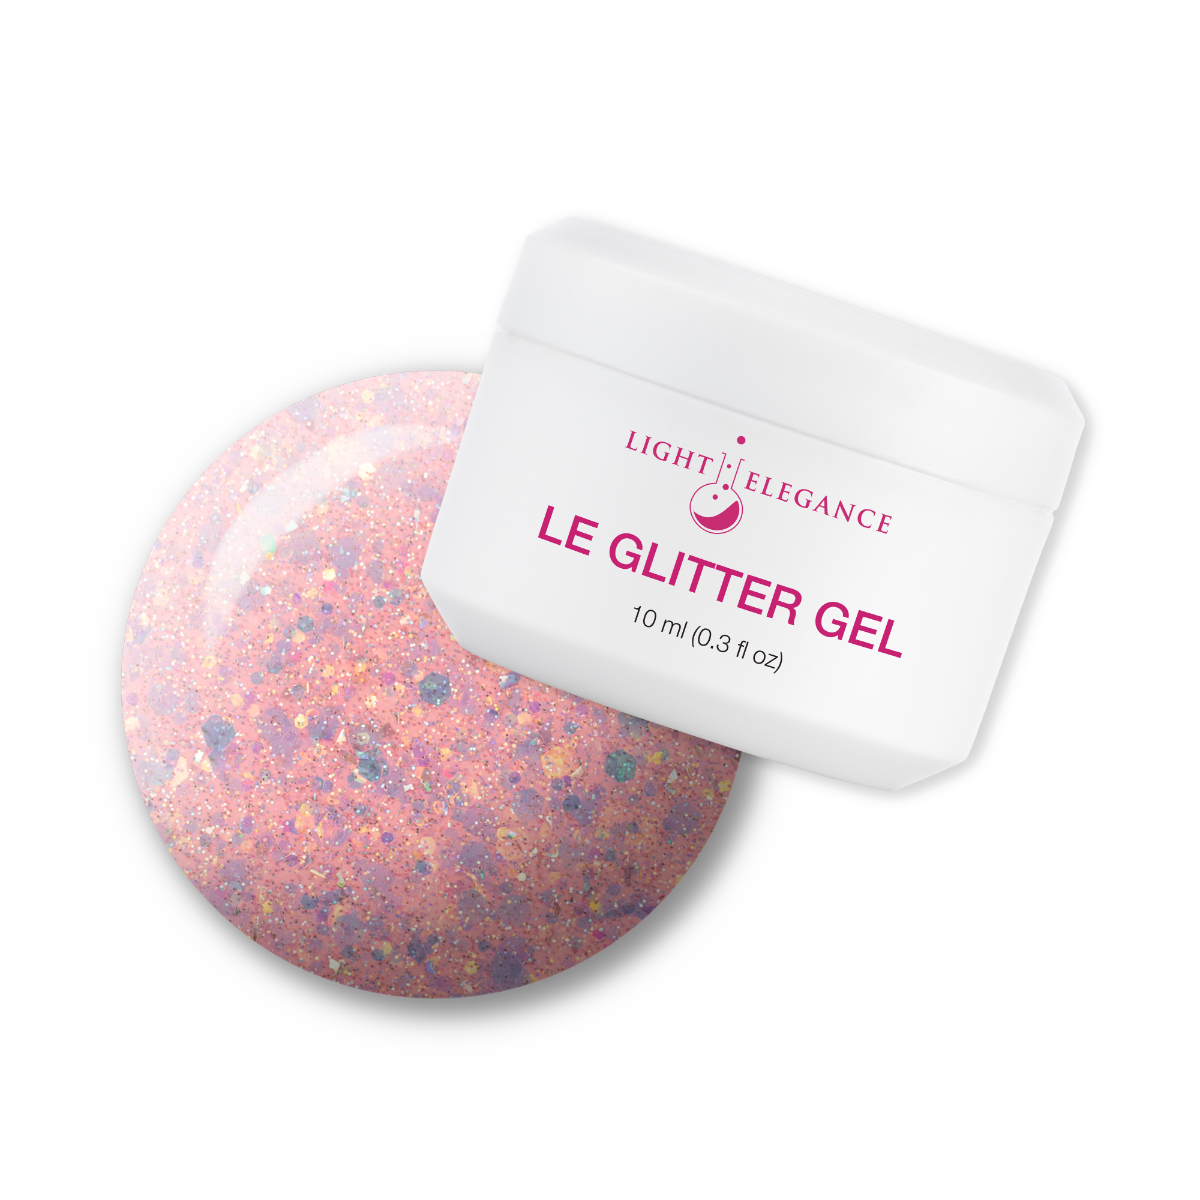 Light Elegance Glitter Gel - My Masterpiece :: New Packaging - Creata Beauty - Professional Beauty Products